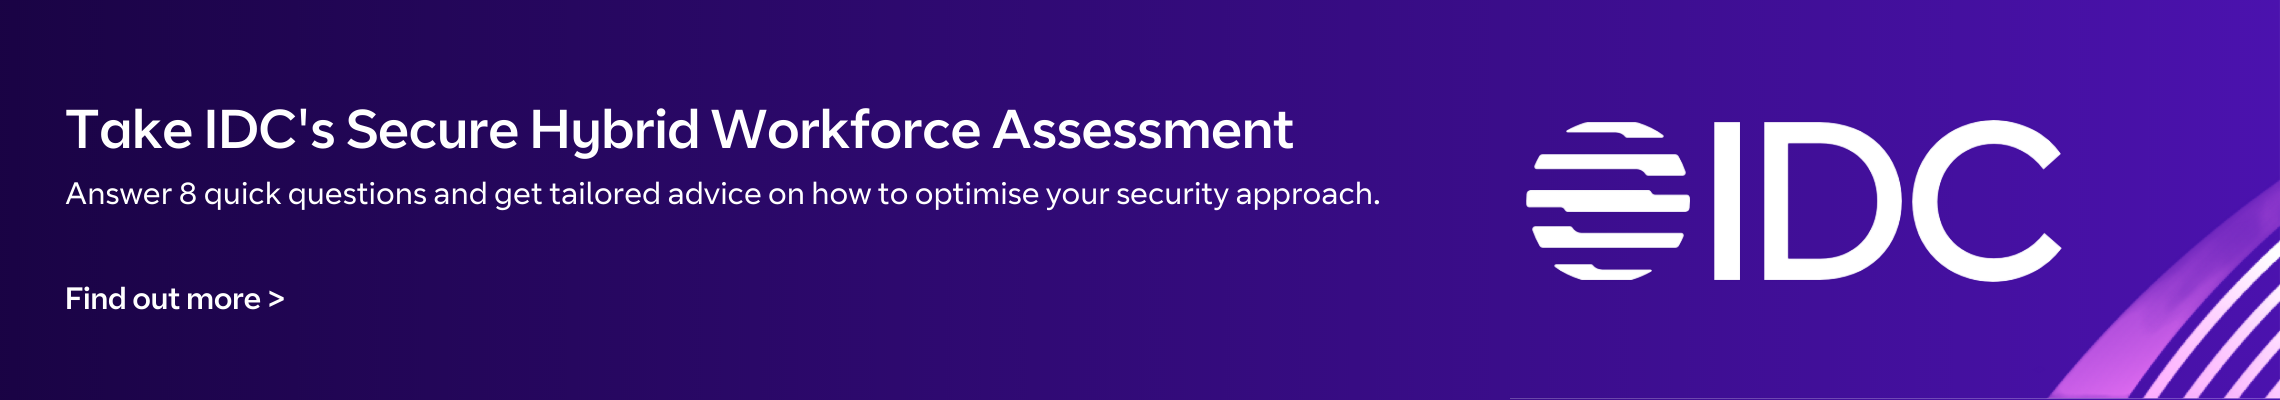 IDC Secure Hybrid Workforce Assessment